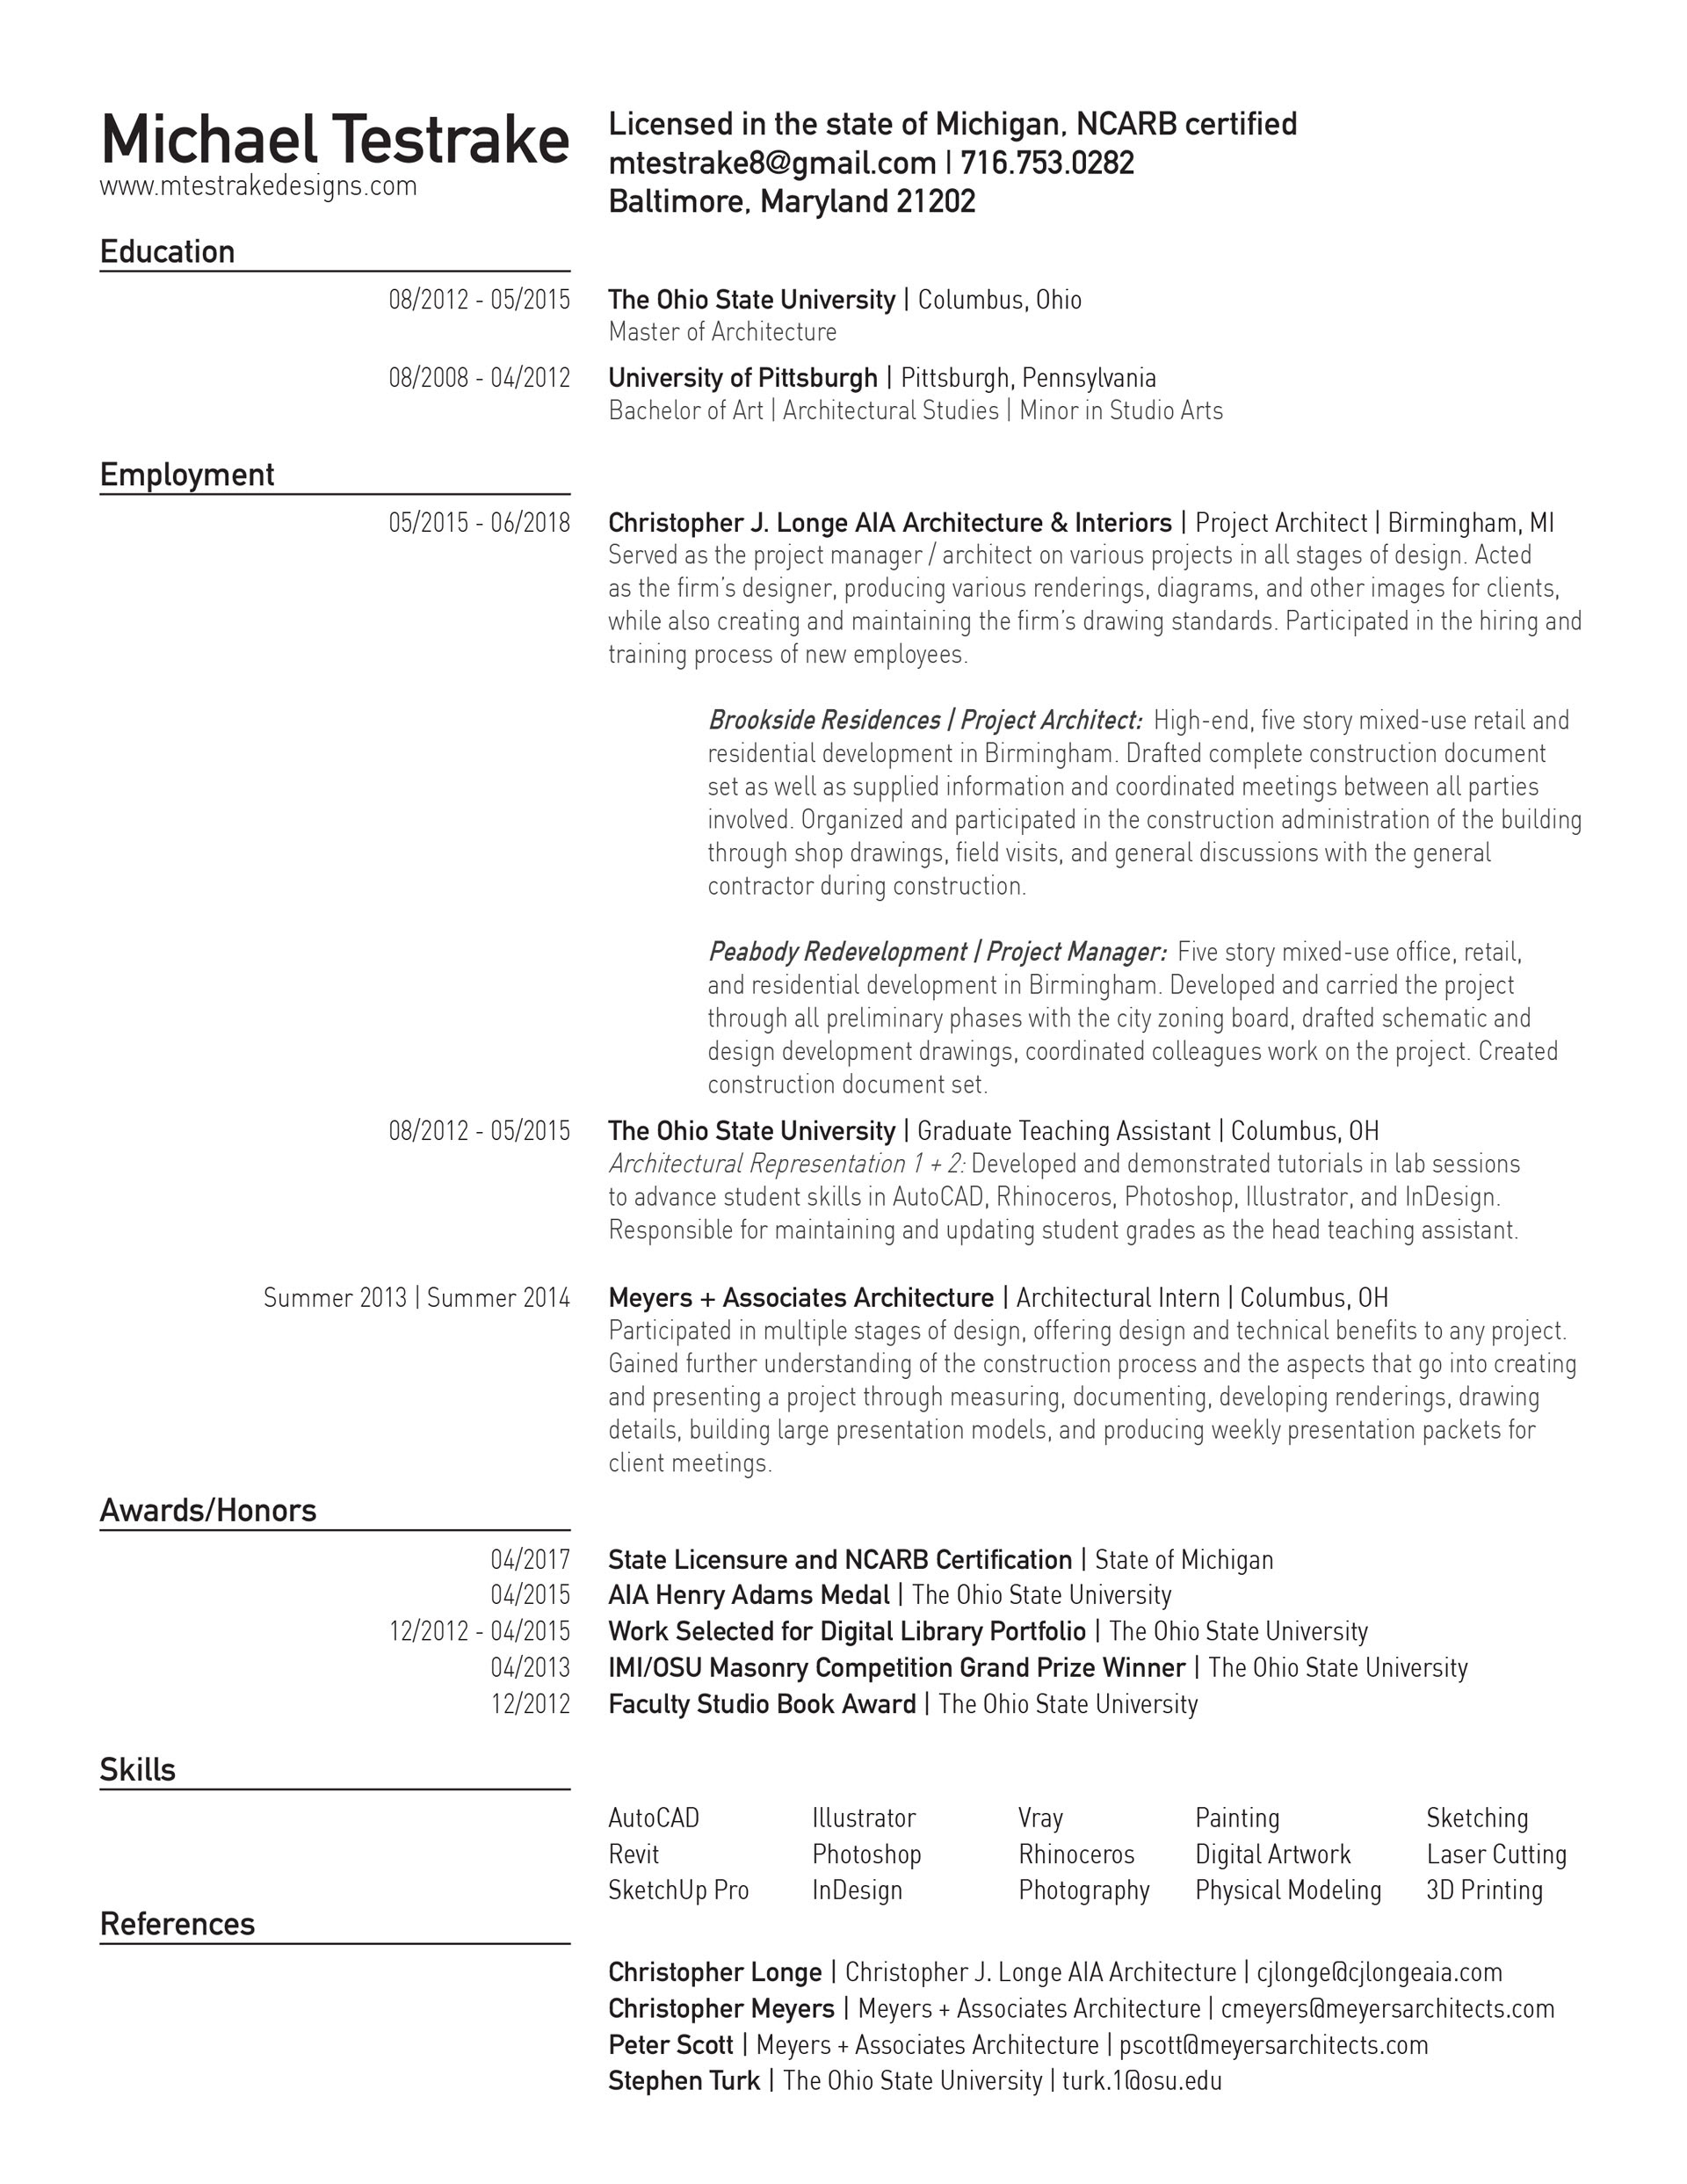 Resume Building Osu template resume